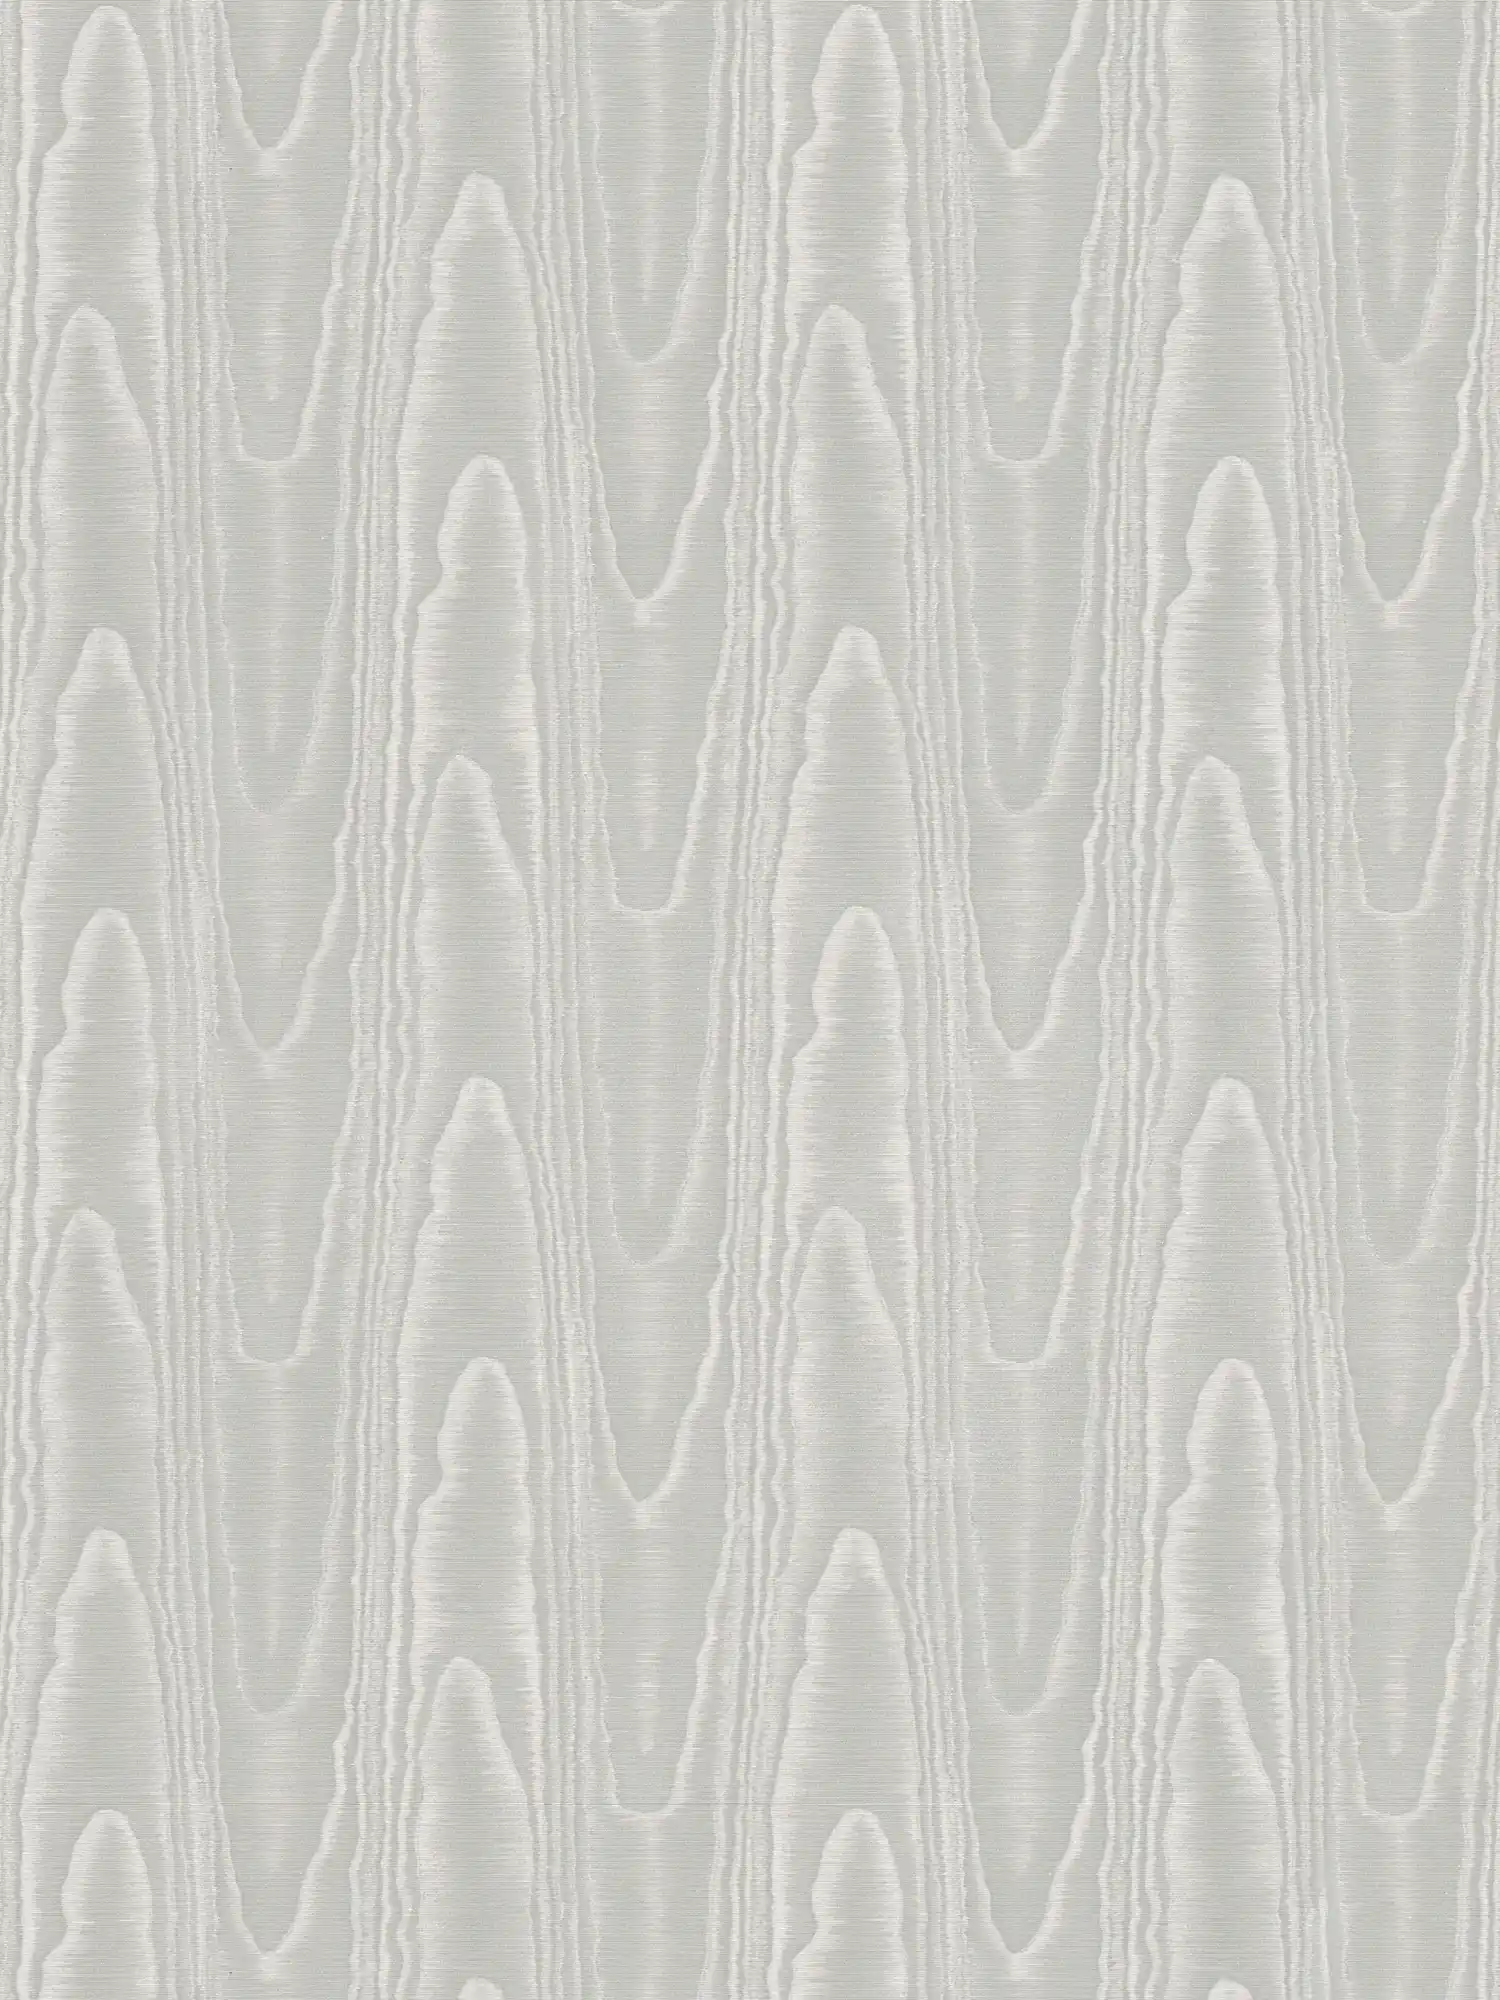 Papel pintado de seda gris plateado moiré y ondulado - Gris
